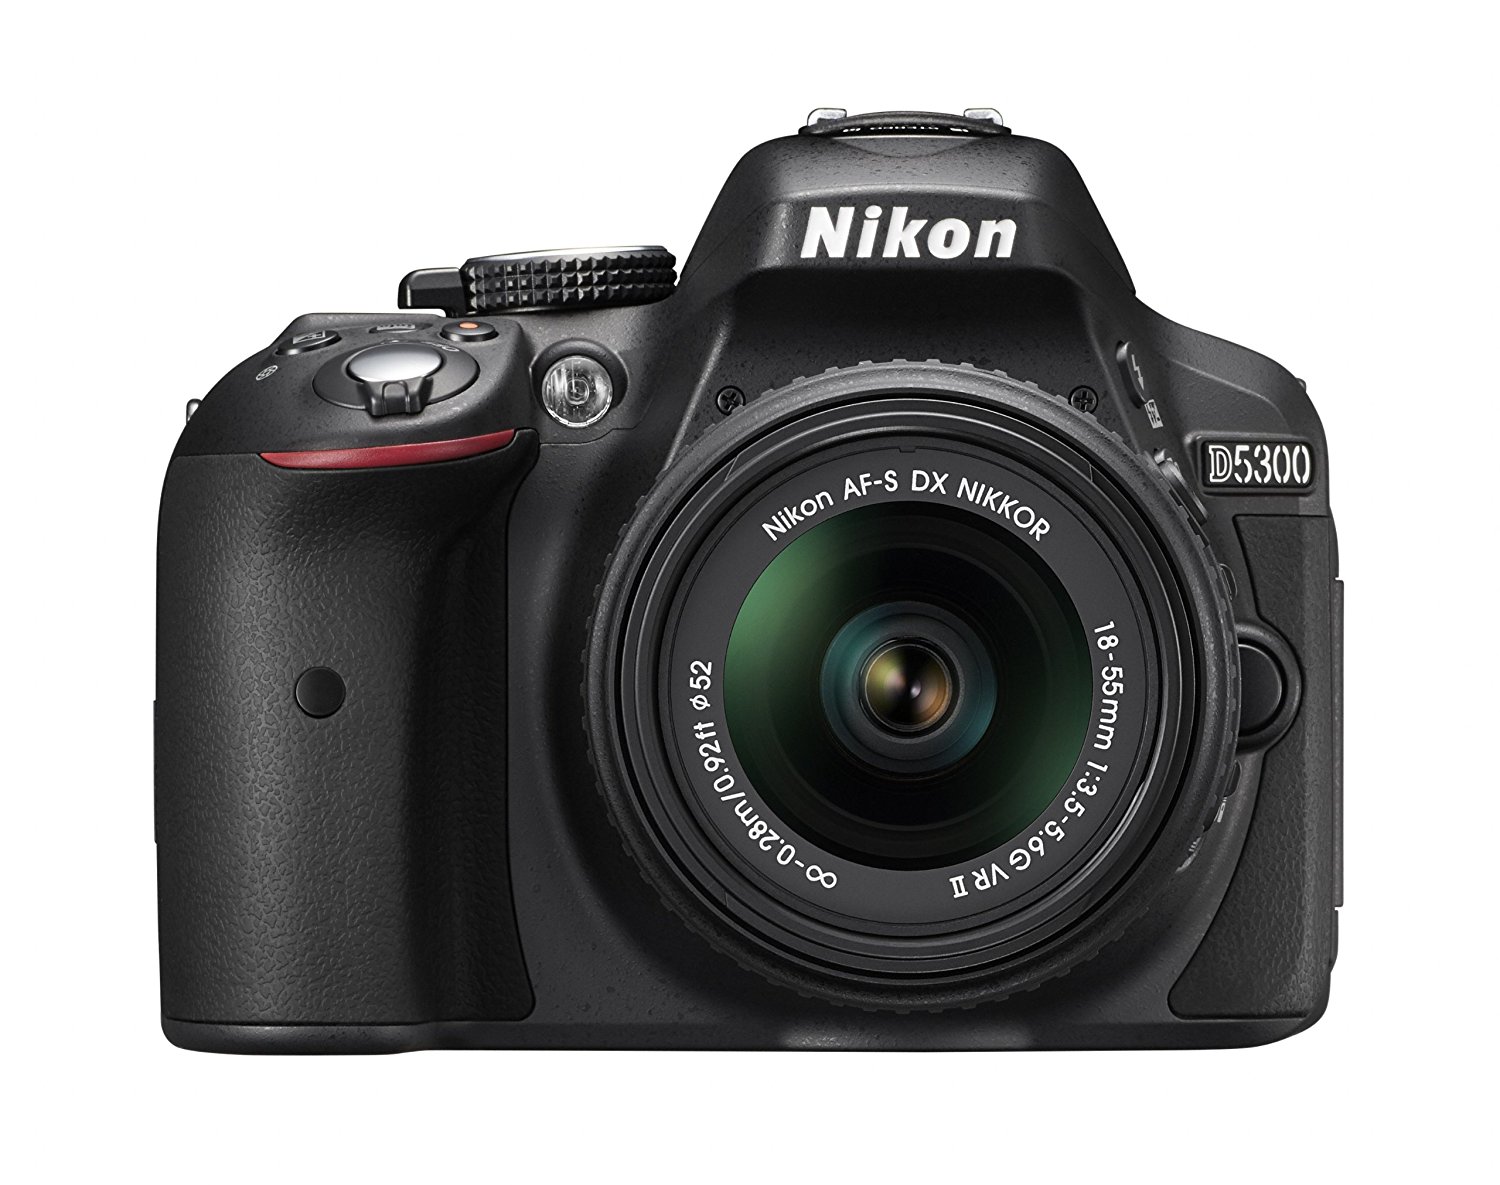  Nikon D5300 24.2 MP CMOS डिजिटल एसएलआर कैमरा 18-55 मिमी f / 3.5-5.6G ED VR II ऑटो फोकस-एस DX NIKKOR ज़ूम लेंस (काला)...